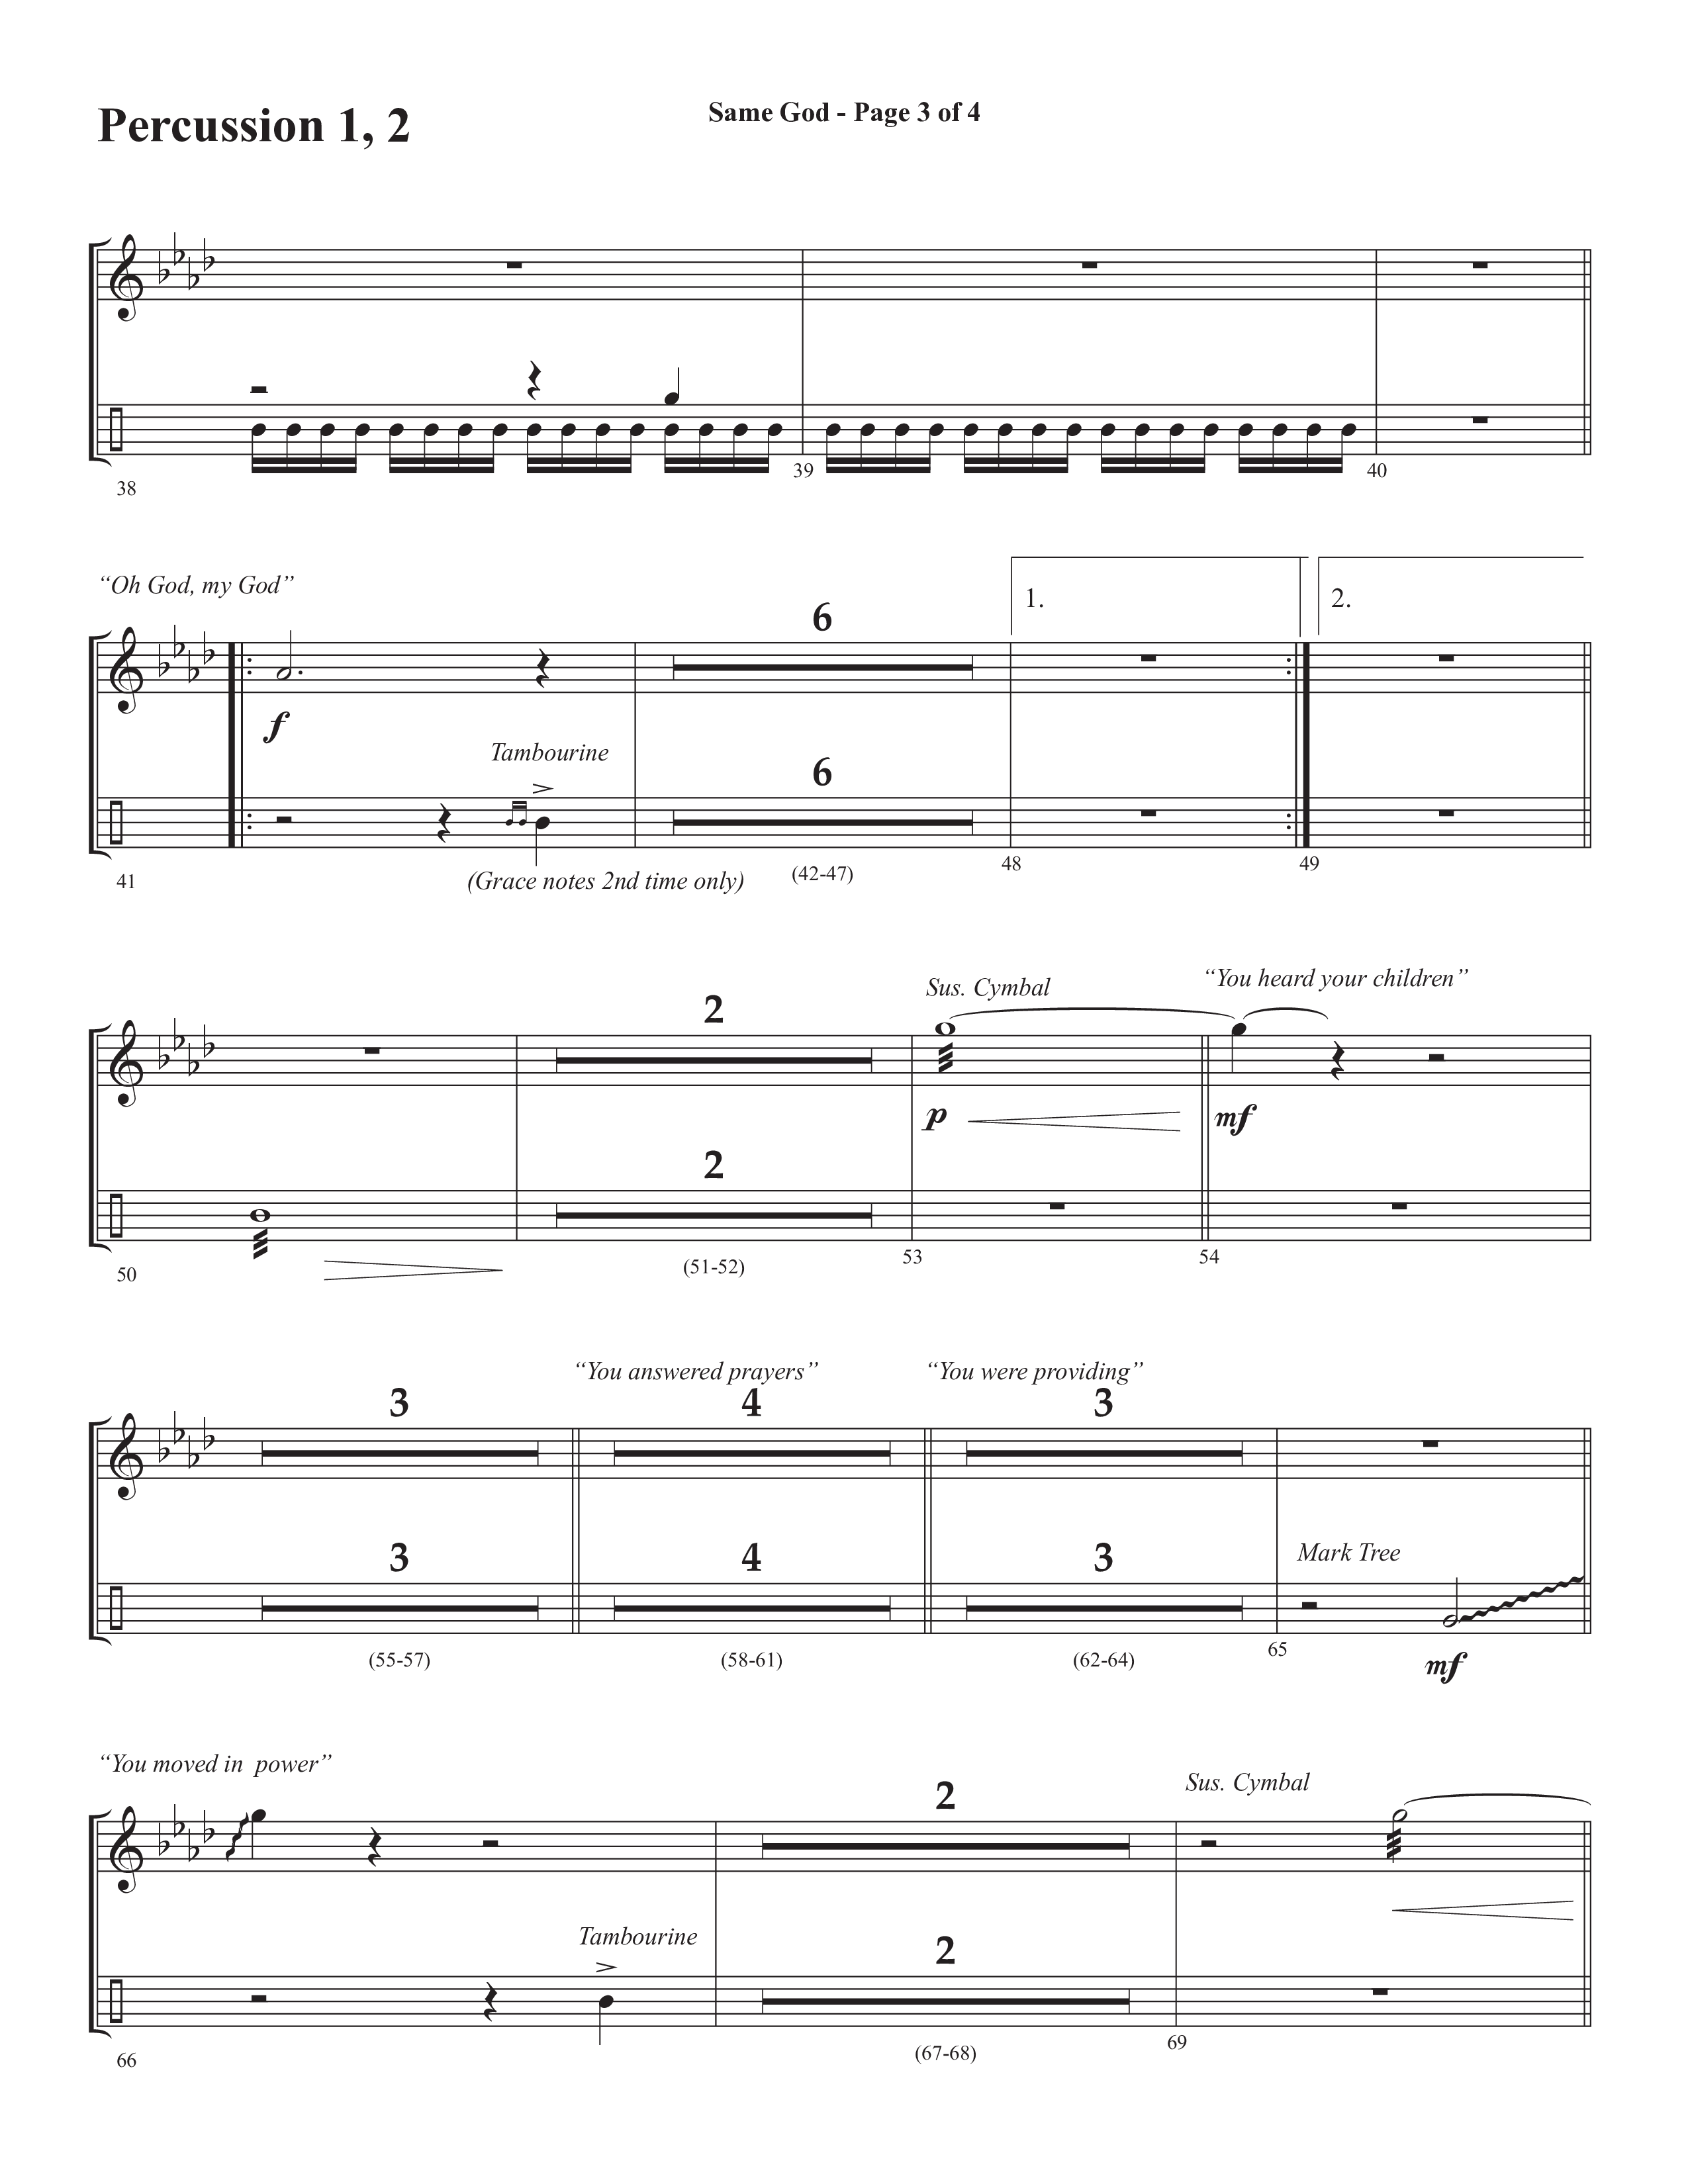 Same God (Choral Anthem SATB) Percussion 1/2 (Semsen Music / Arr. Phil Nitz)